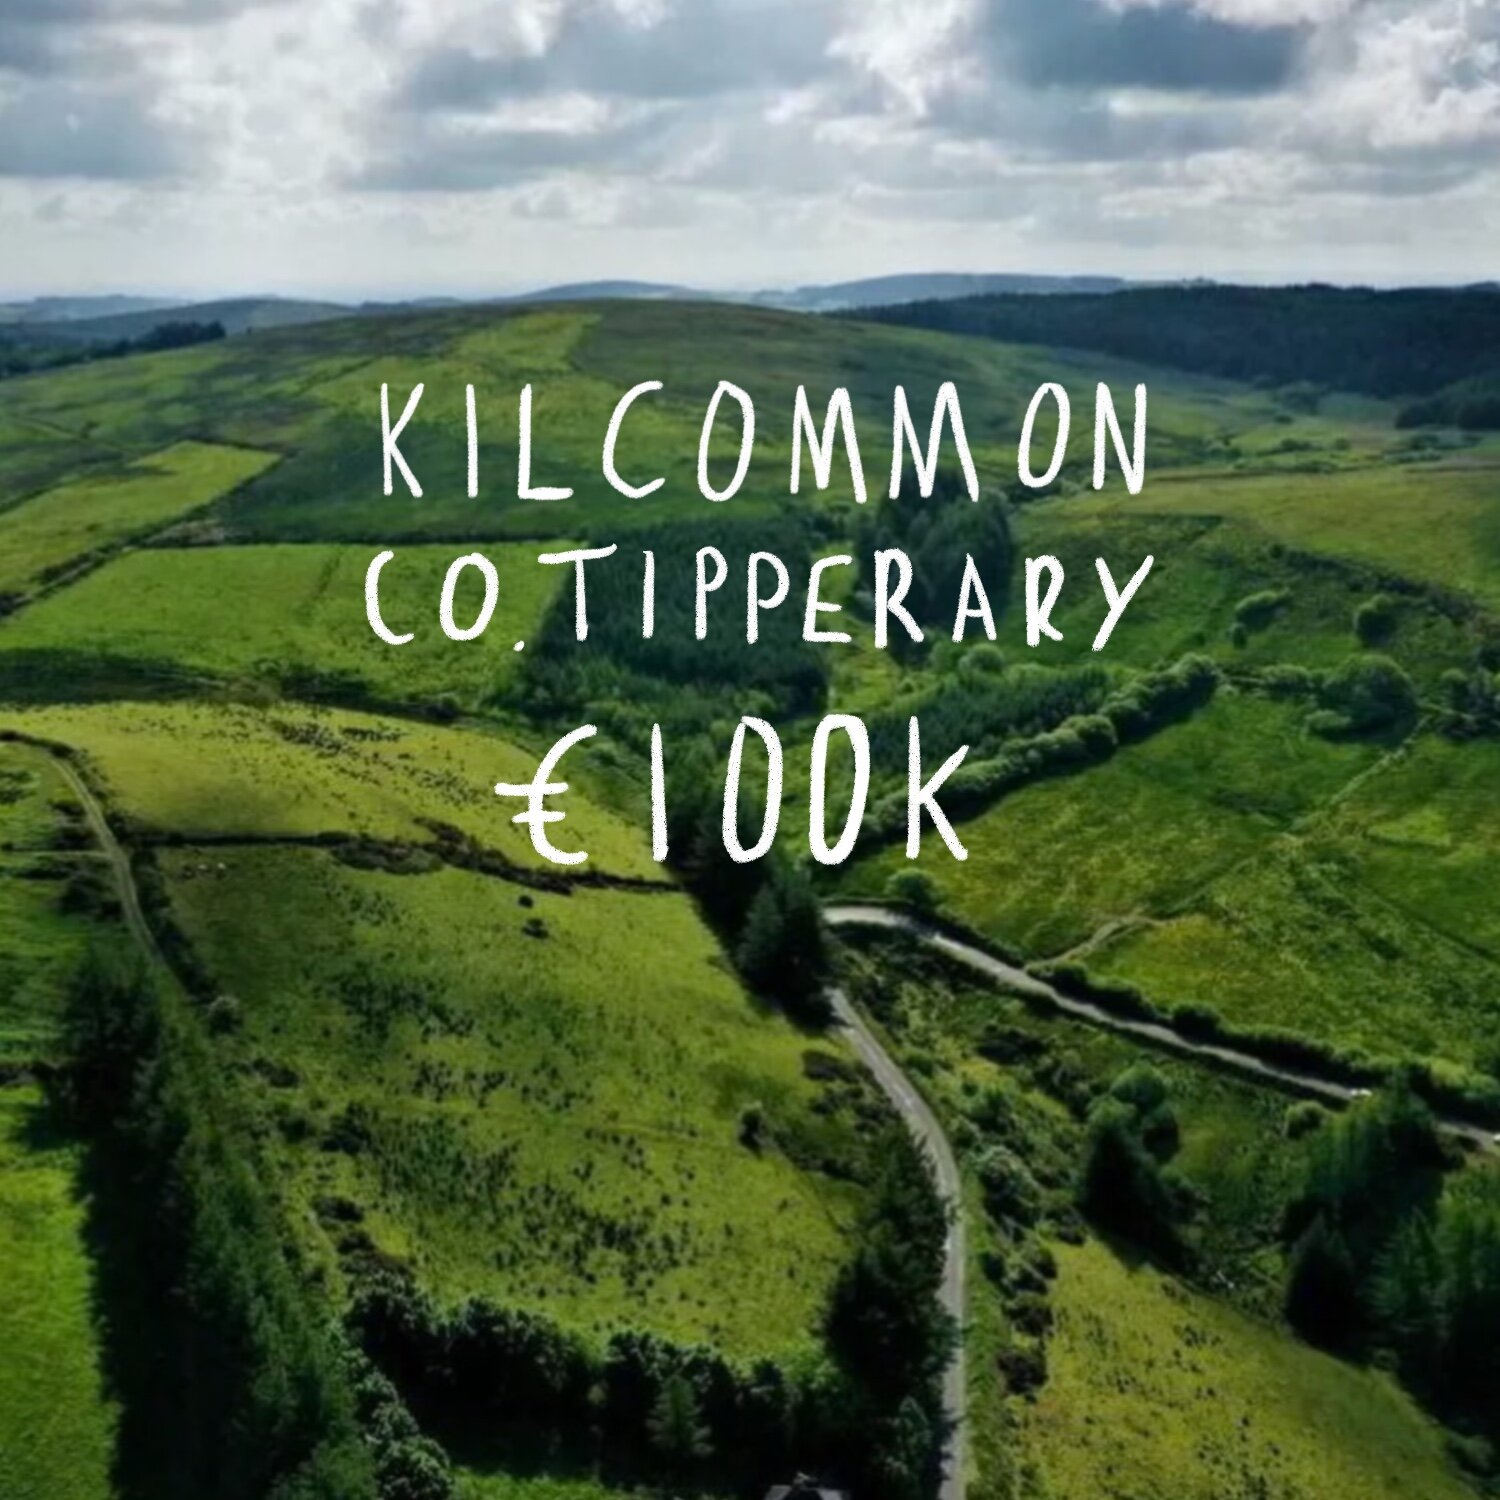 Anglessey Road, Kilcommon, Thurles, Co. Tipperary. €100k